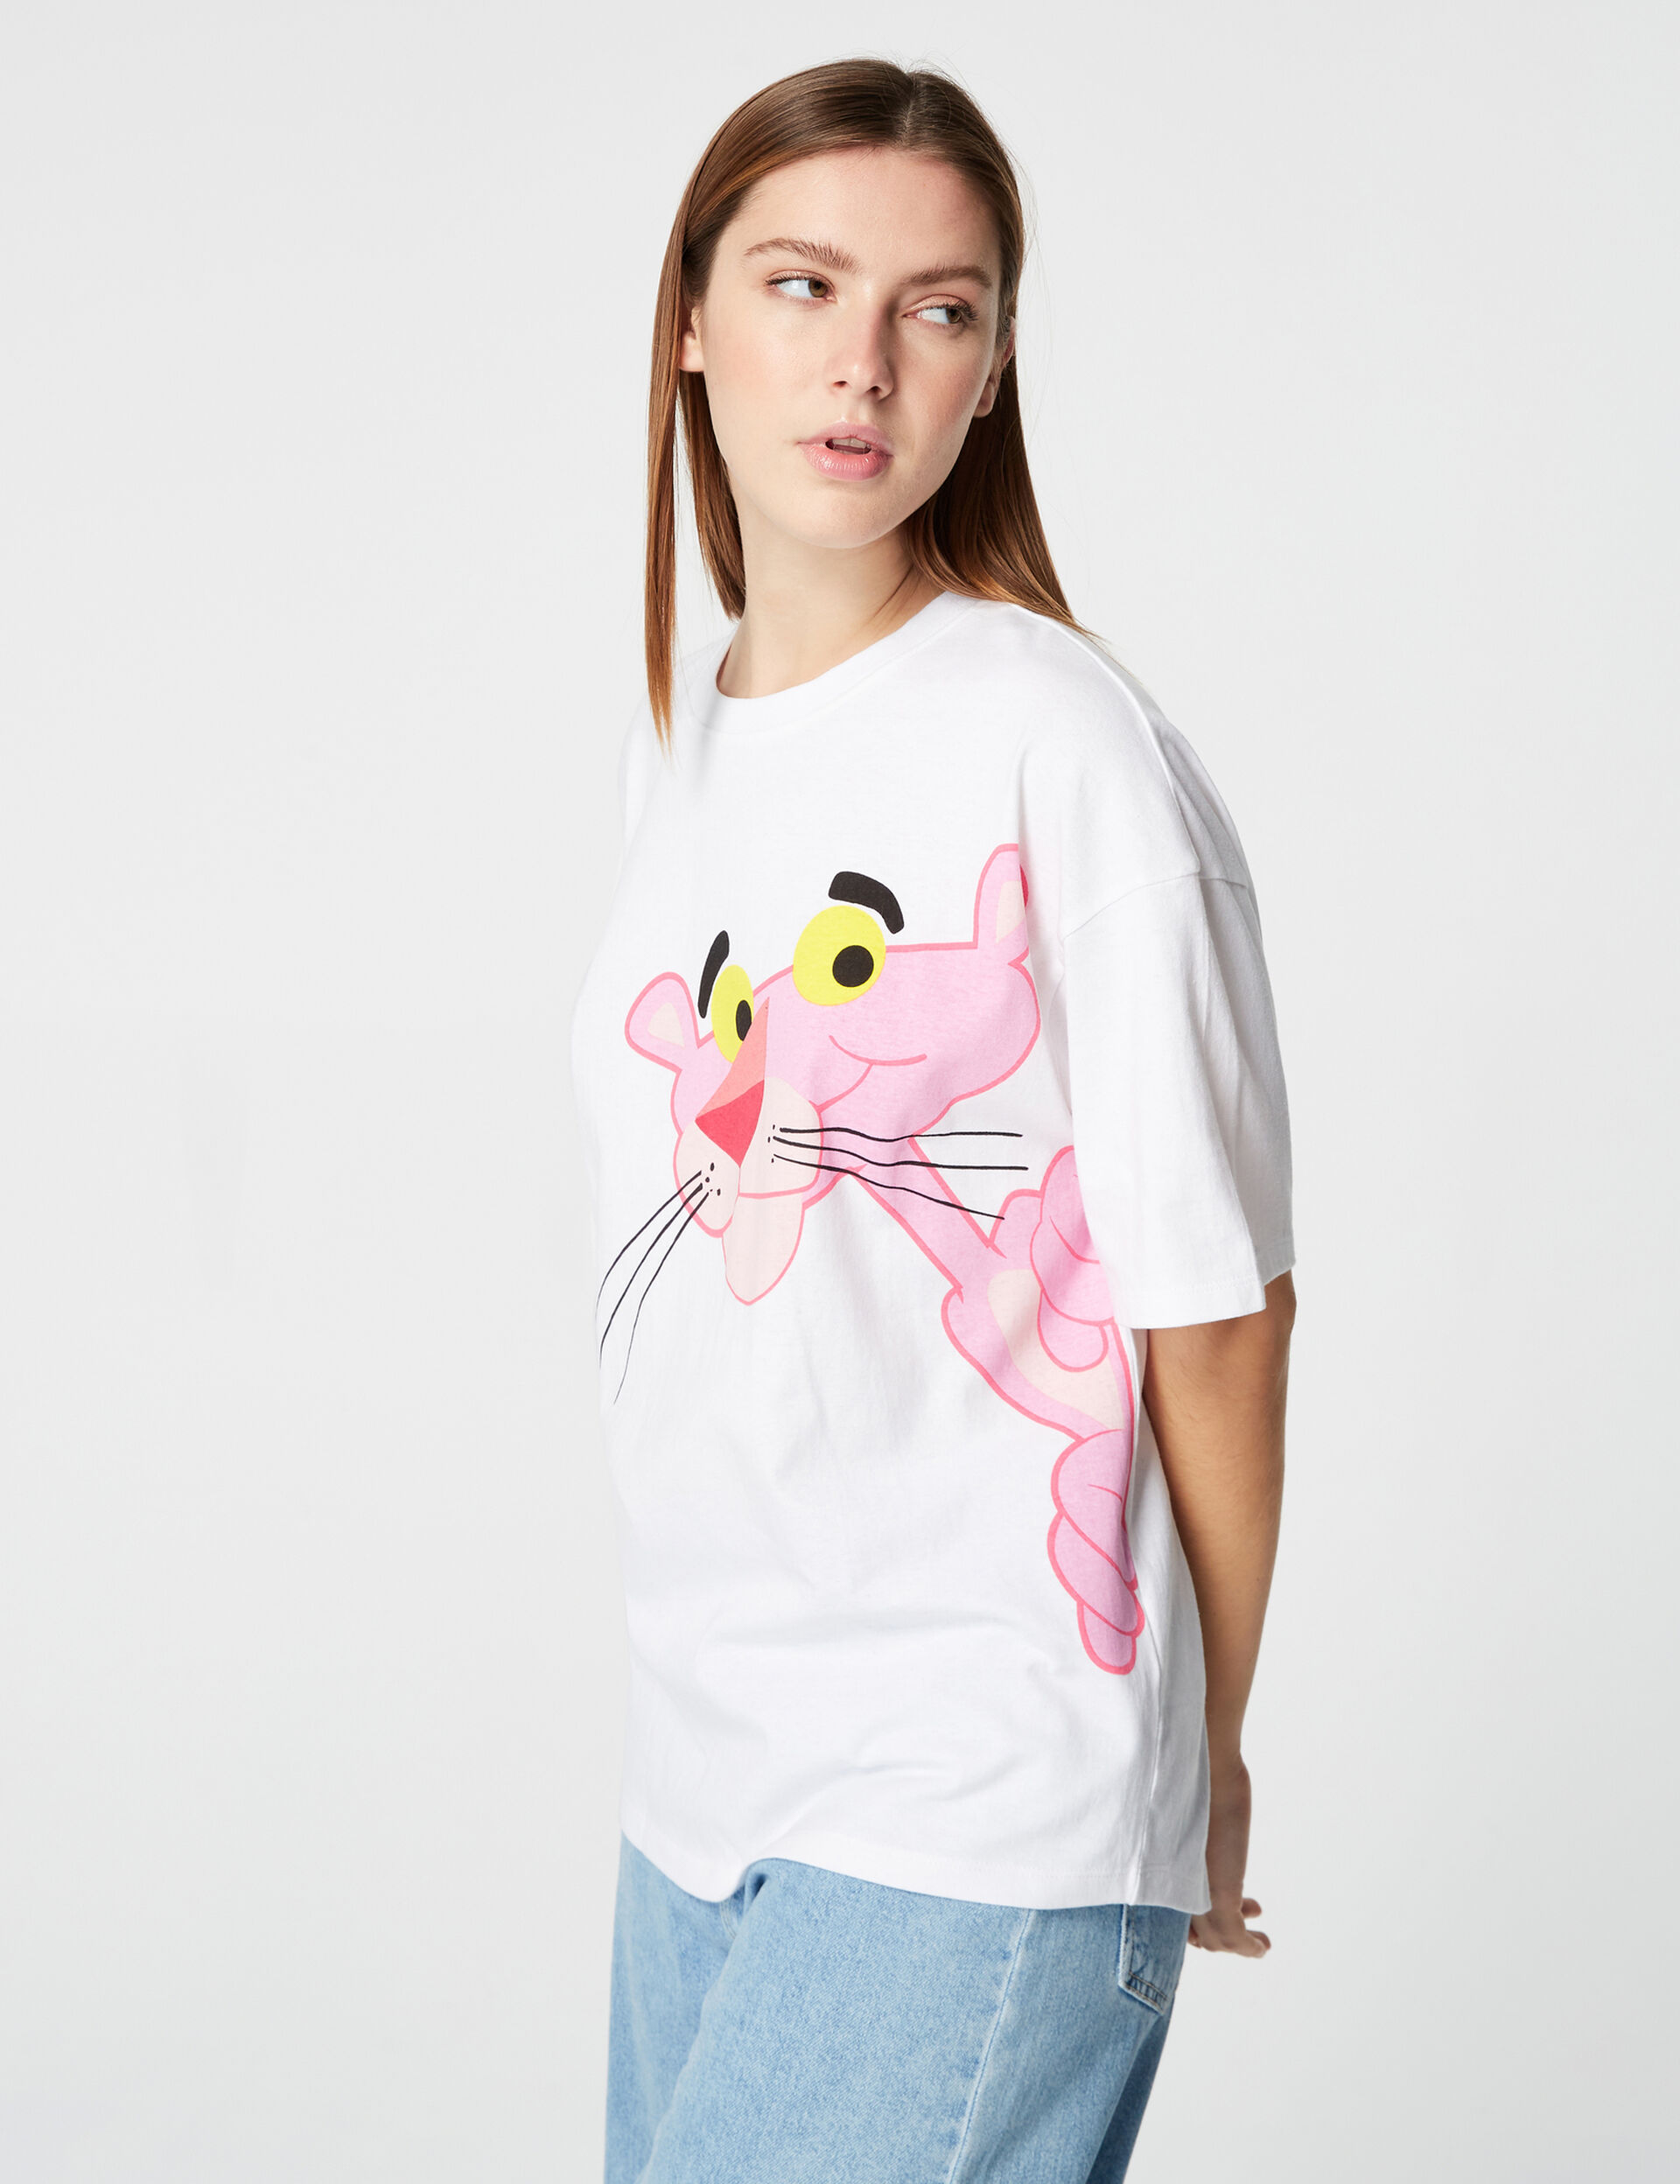 Pink Panther T-shirt